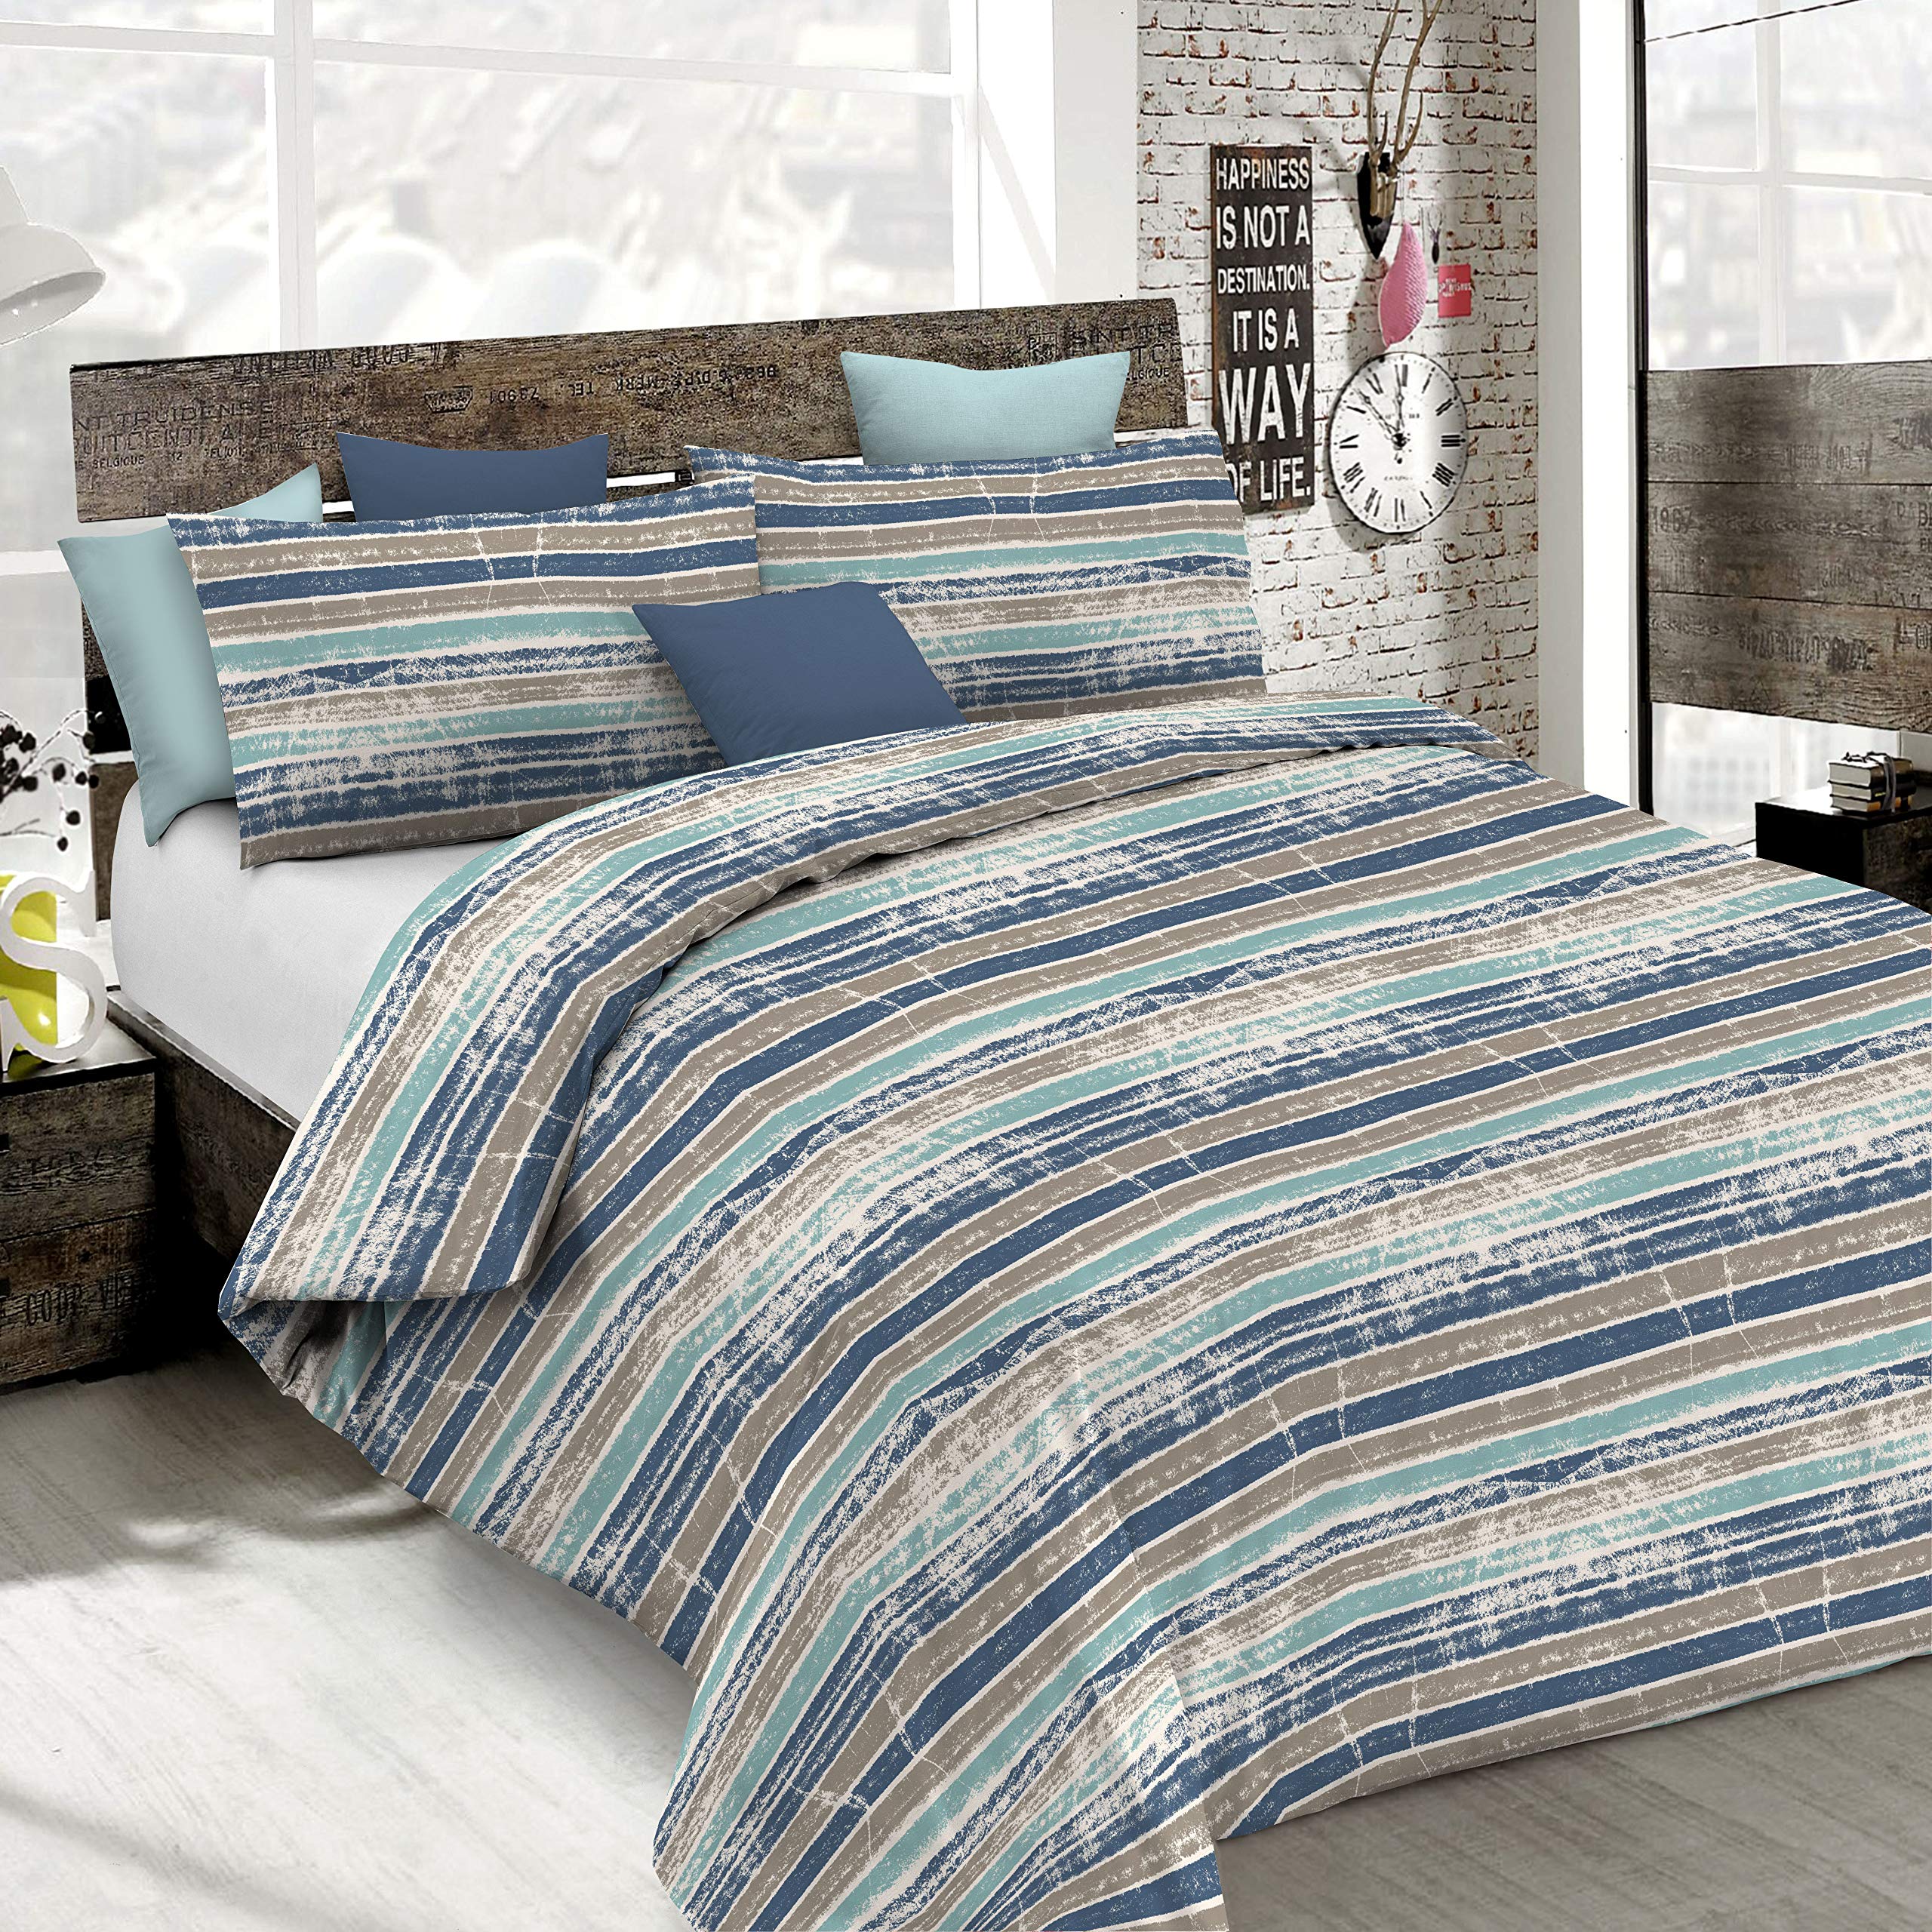 Italian Bed Linen Fantasy Bettbezug, Murales, Einzelne